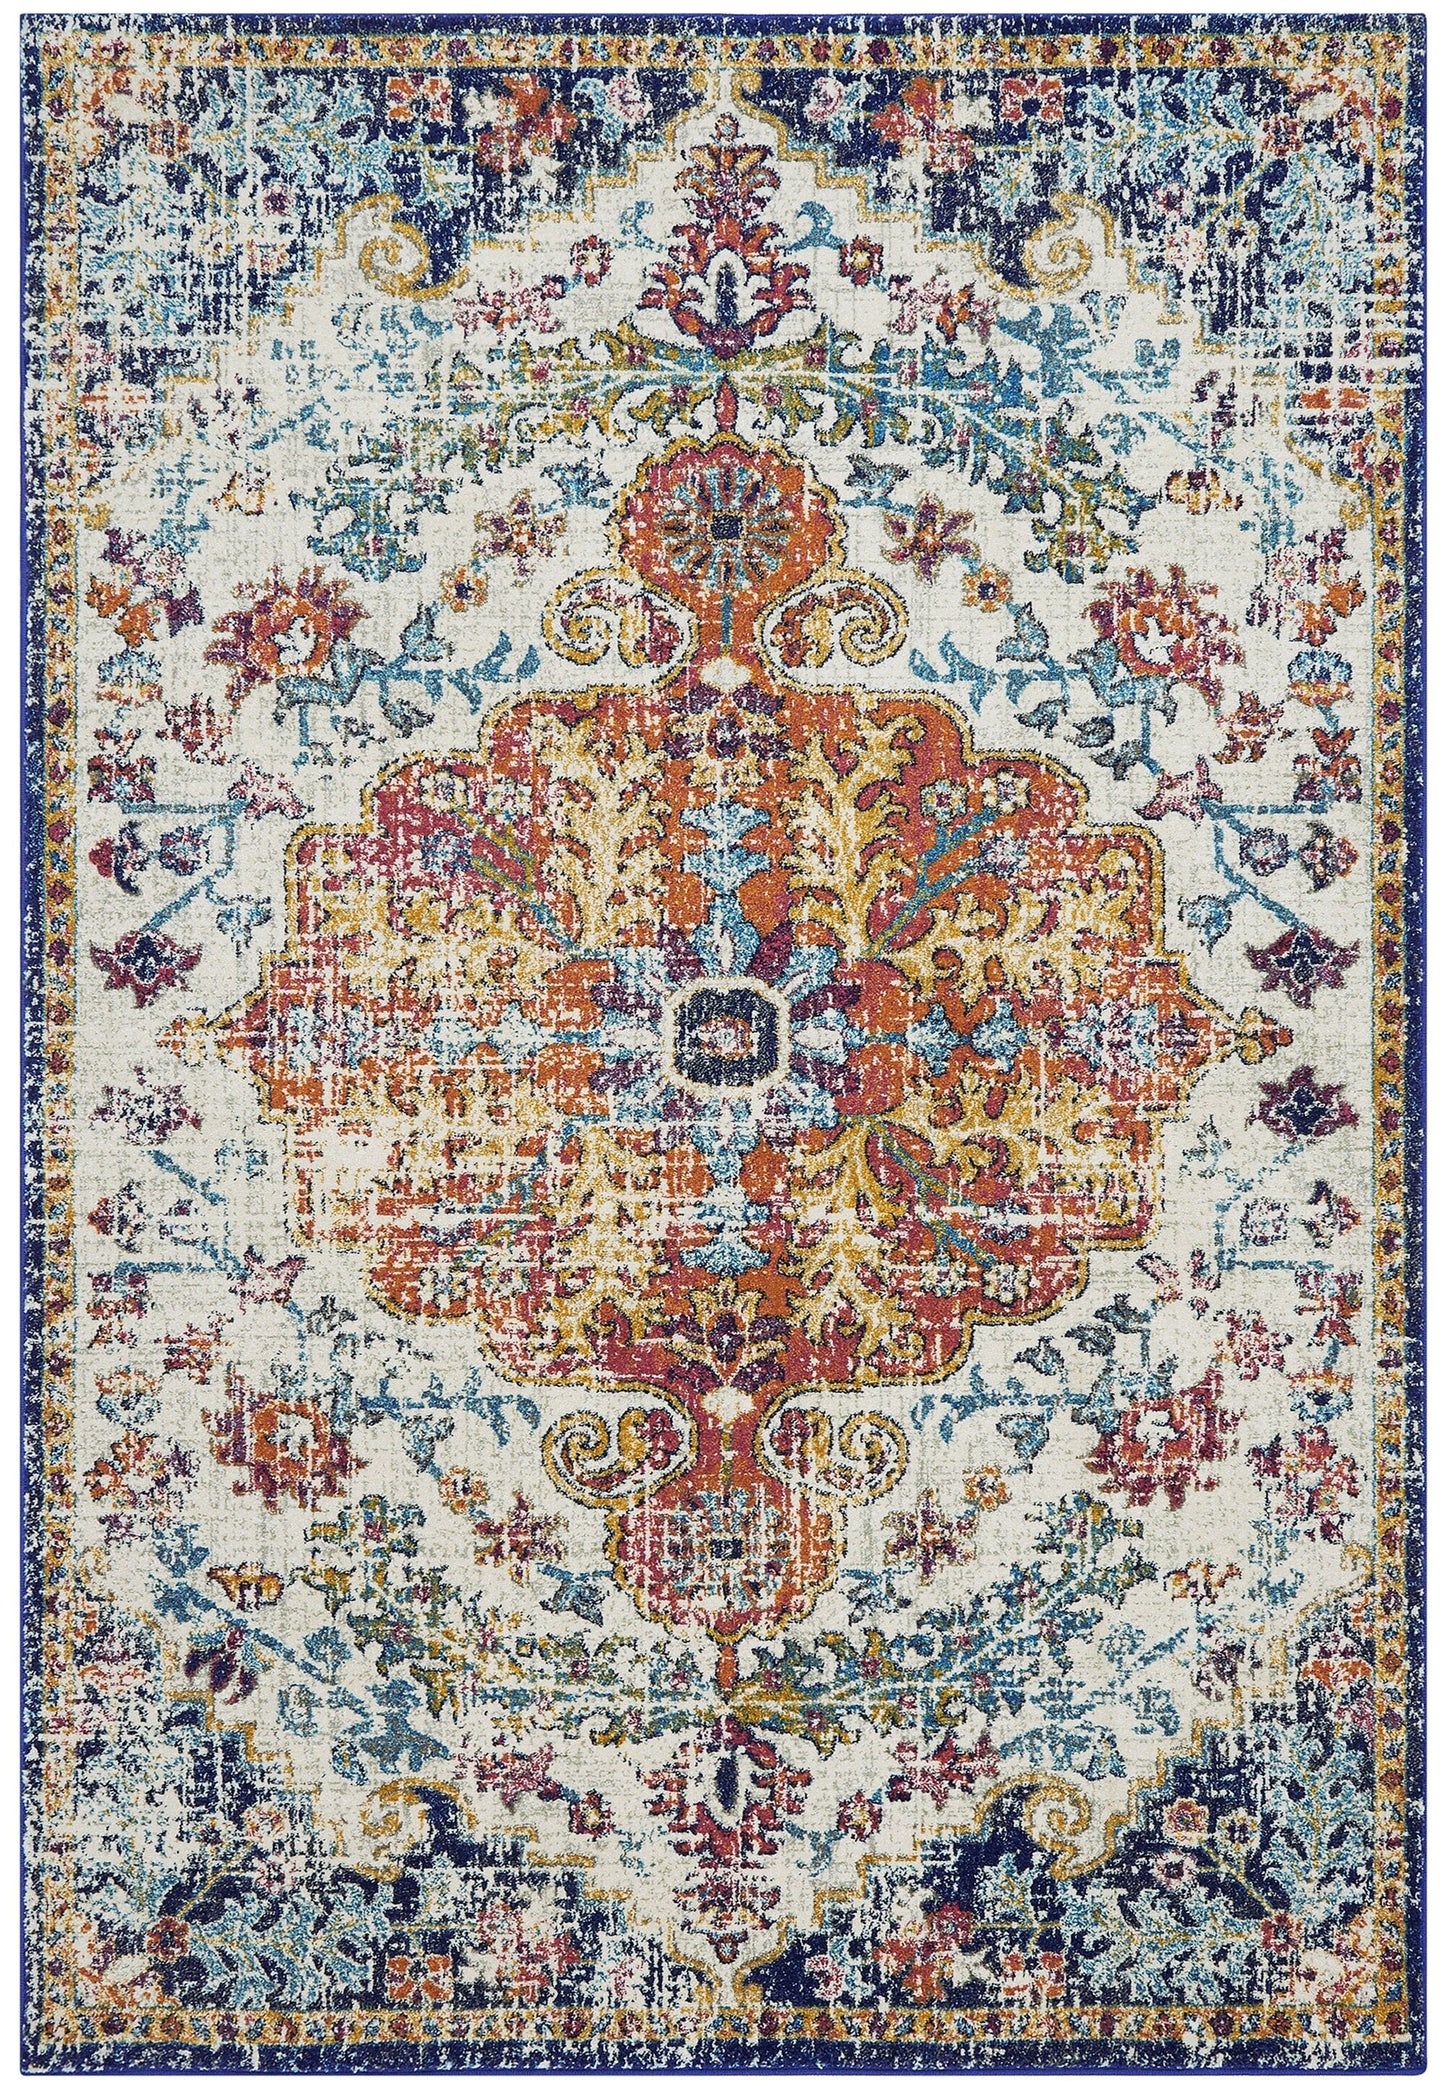 Asiatic Carpets Nova Machine Woven Rug Medallion Multi - 160 x 230cm